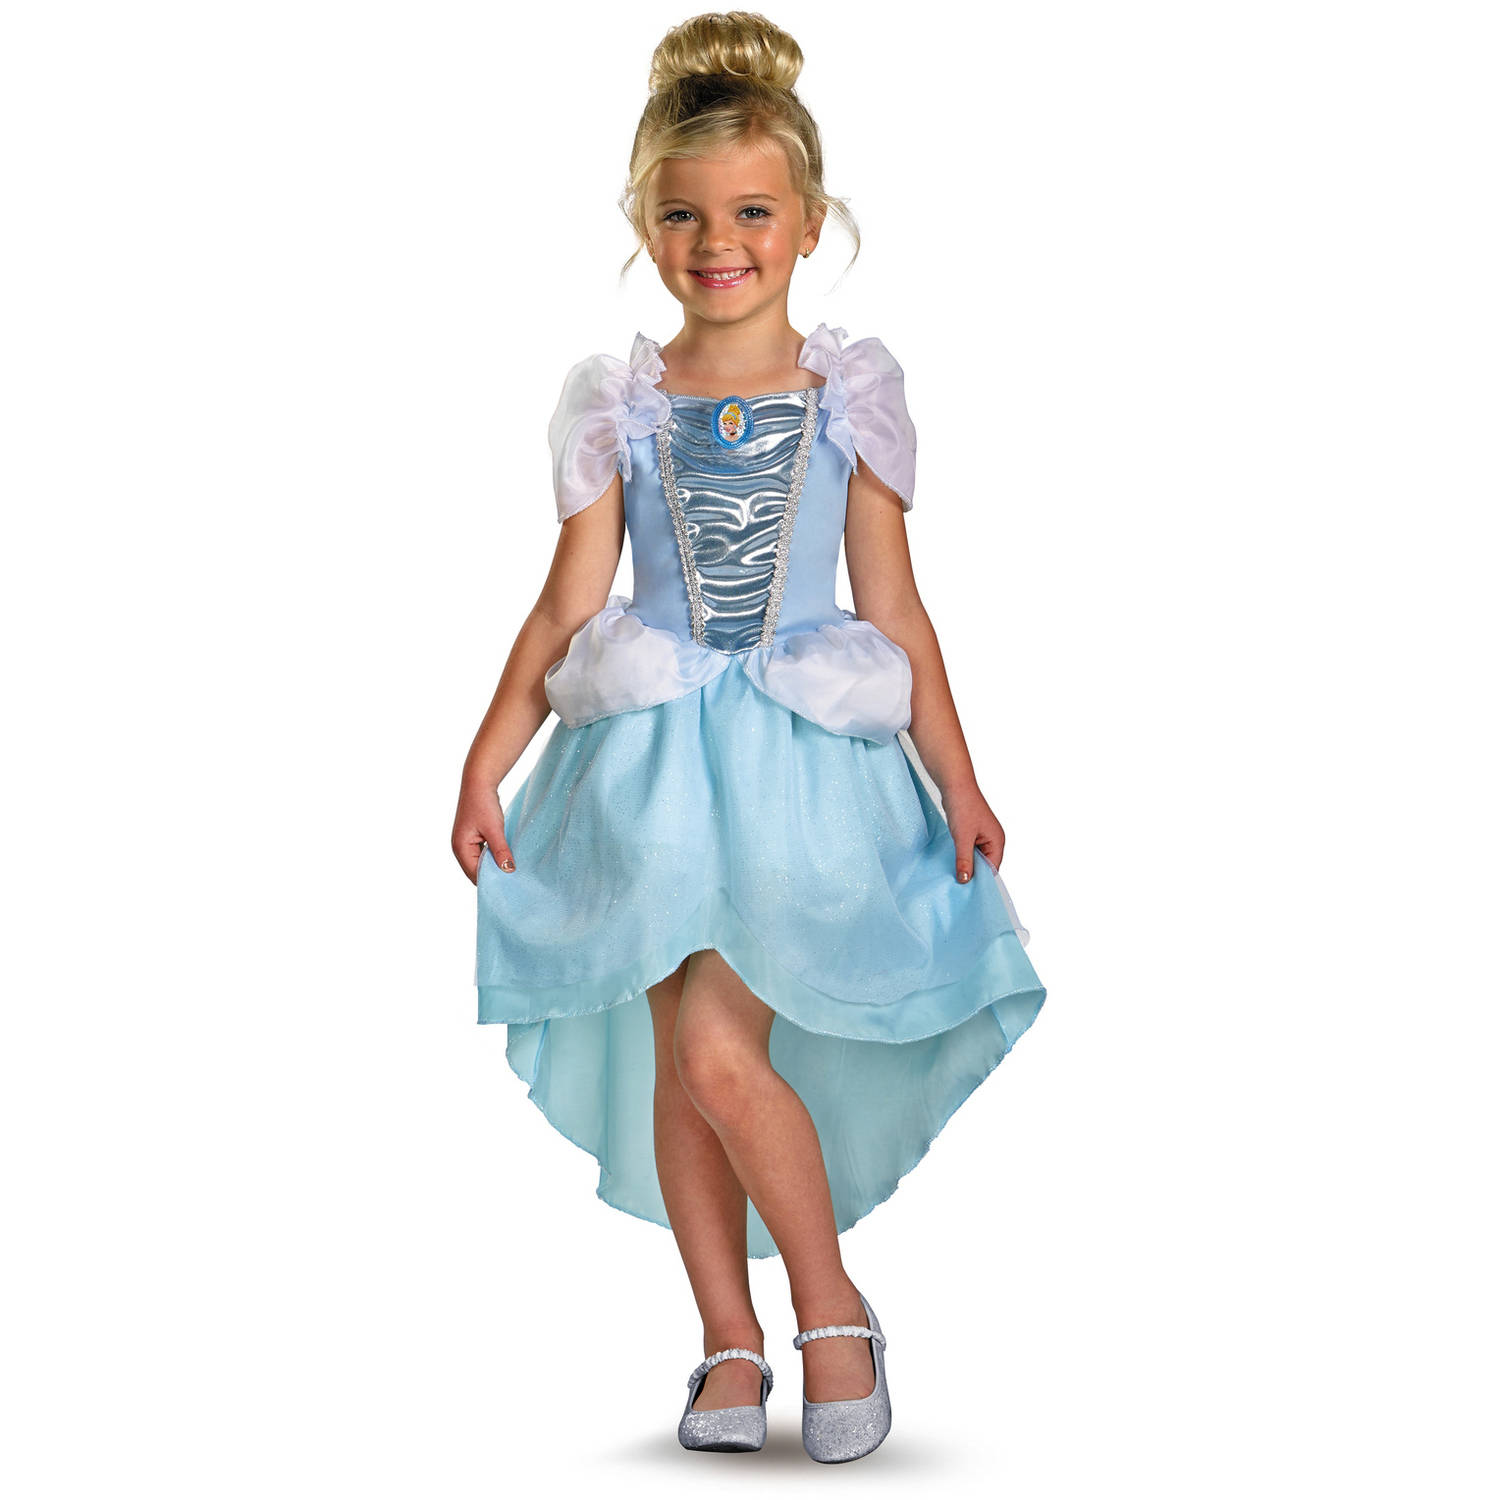 Cinderella Basic Plus Child Halloween Costume, One Size -S (4-6) - image 1 of 2